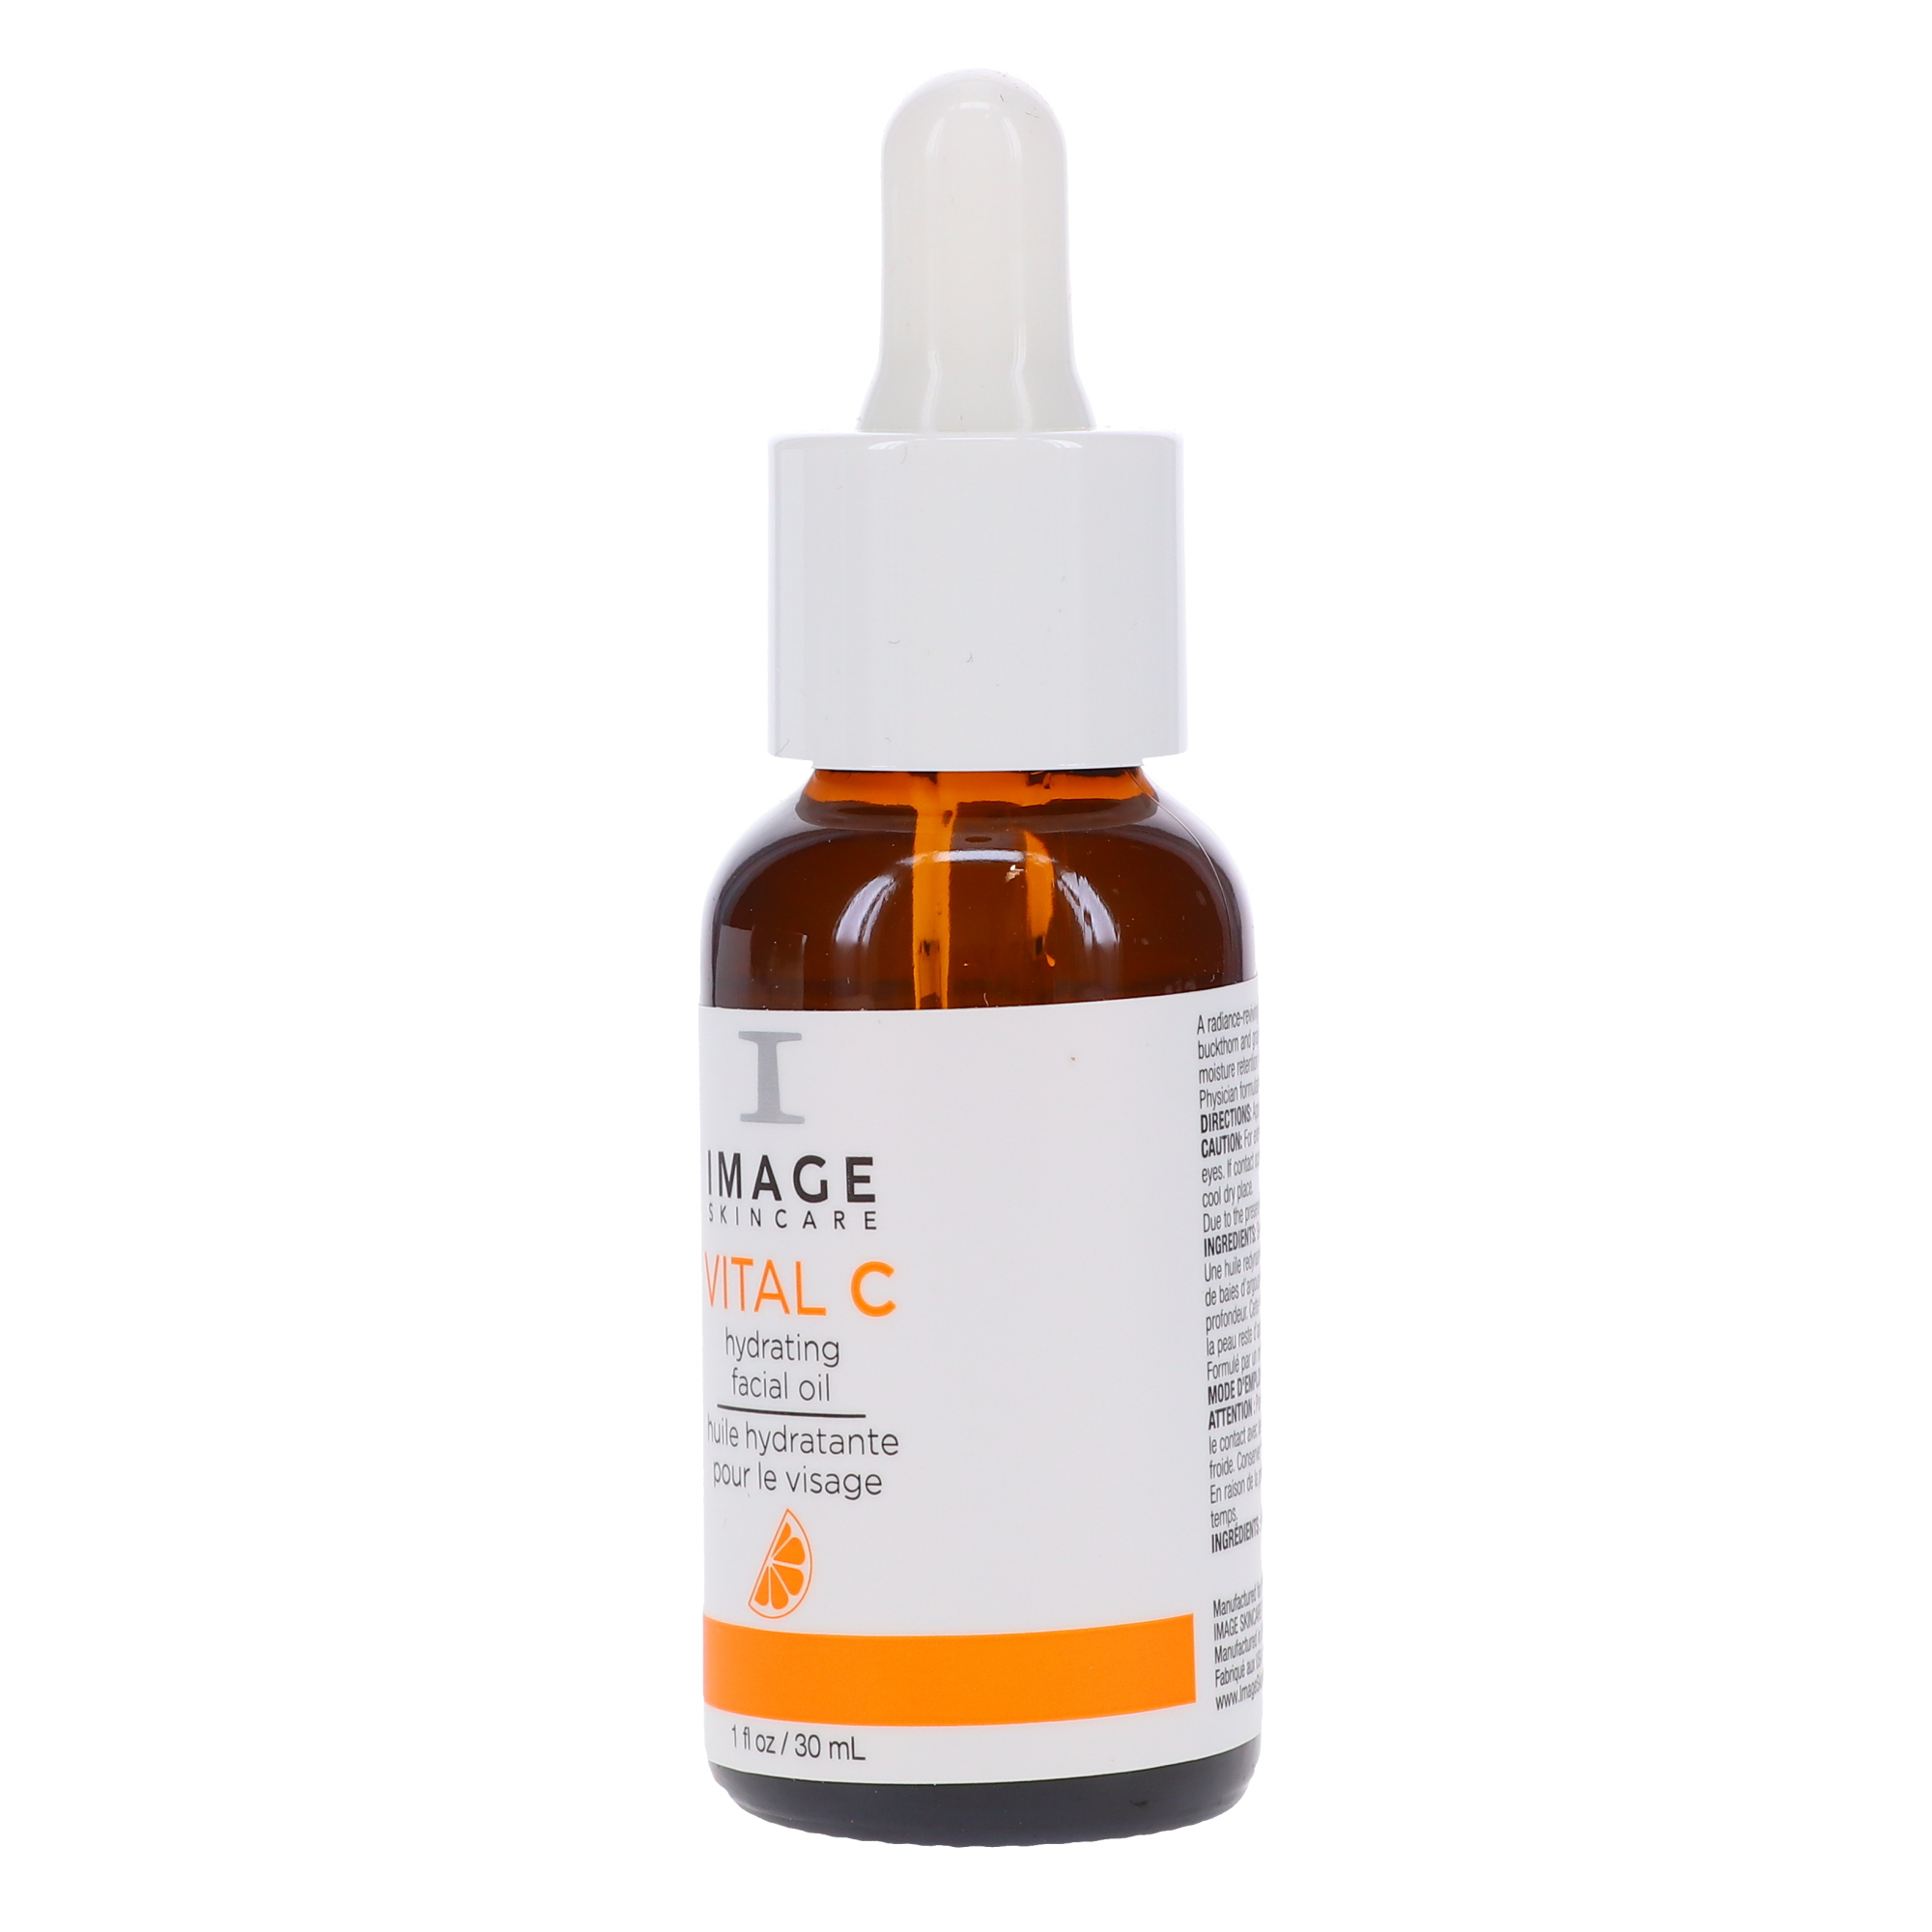 Image Skincare Vital C Hydrating Facial Oil 1oz - image 3 of 9